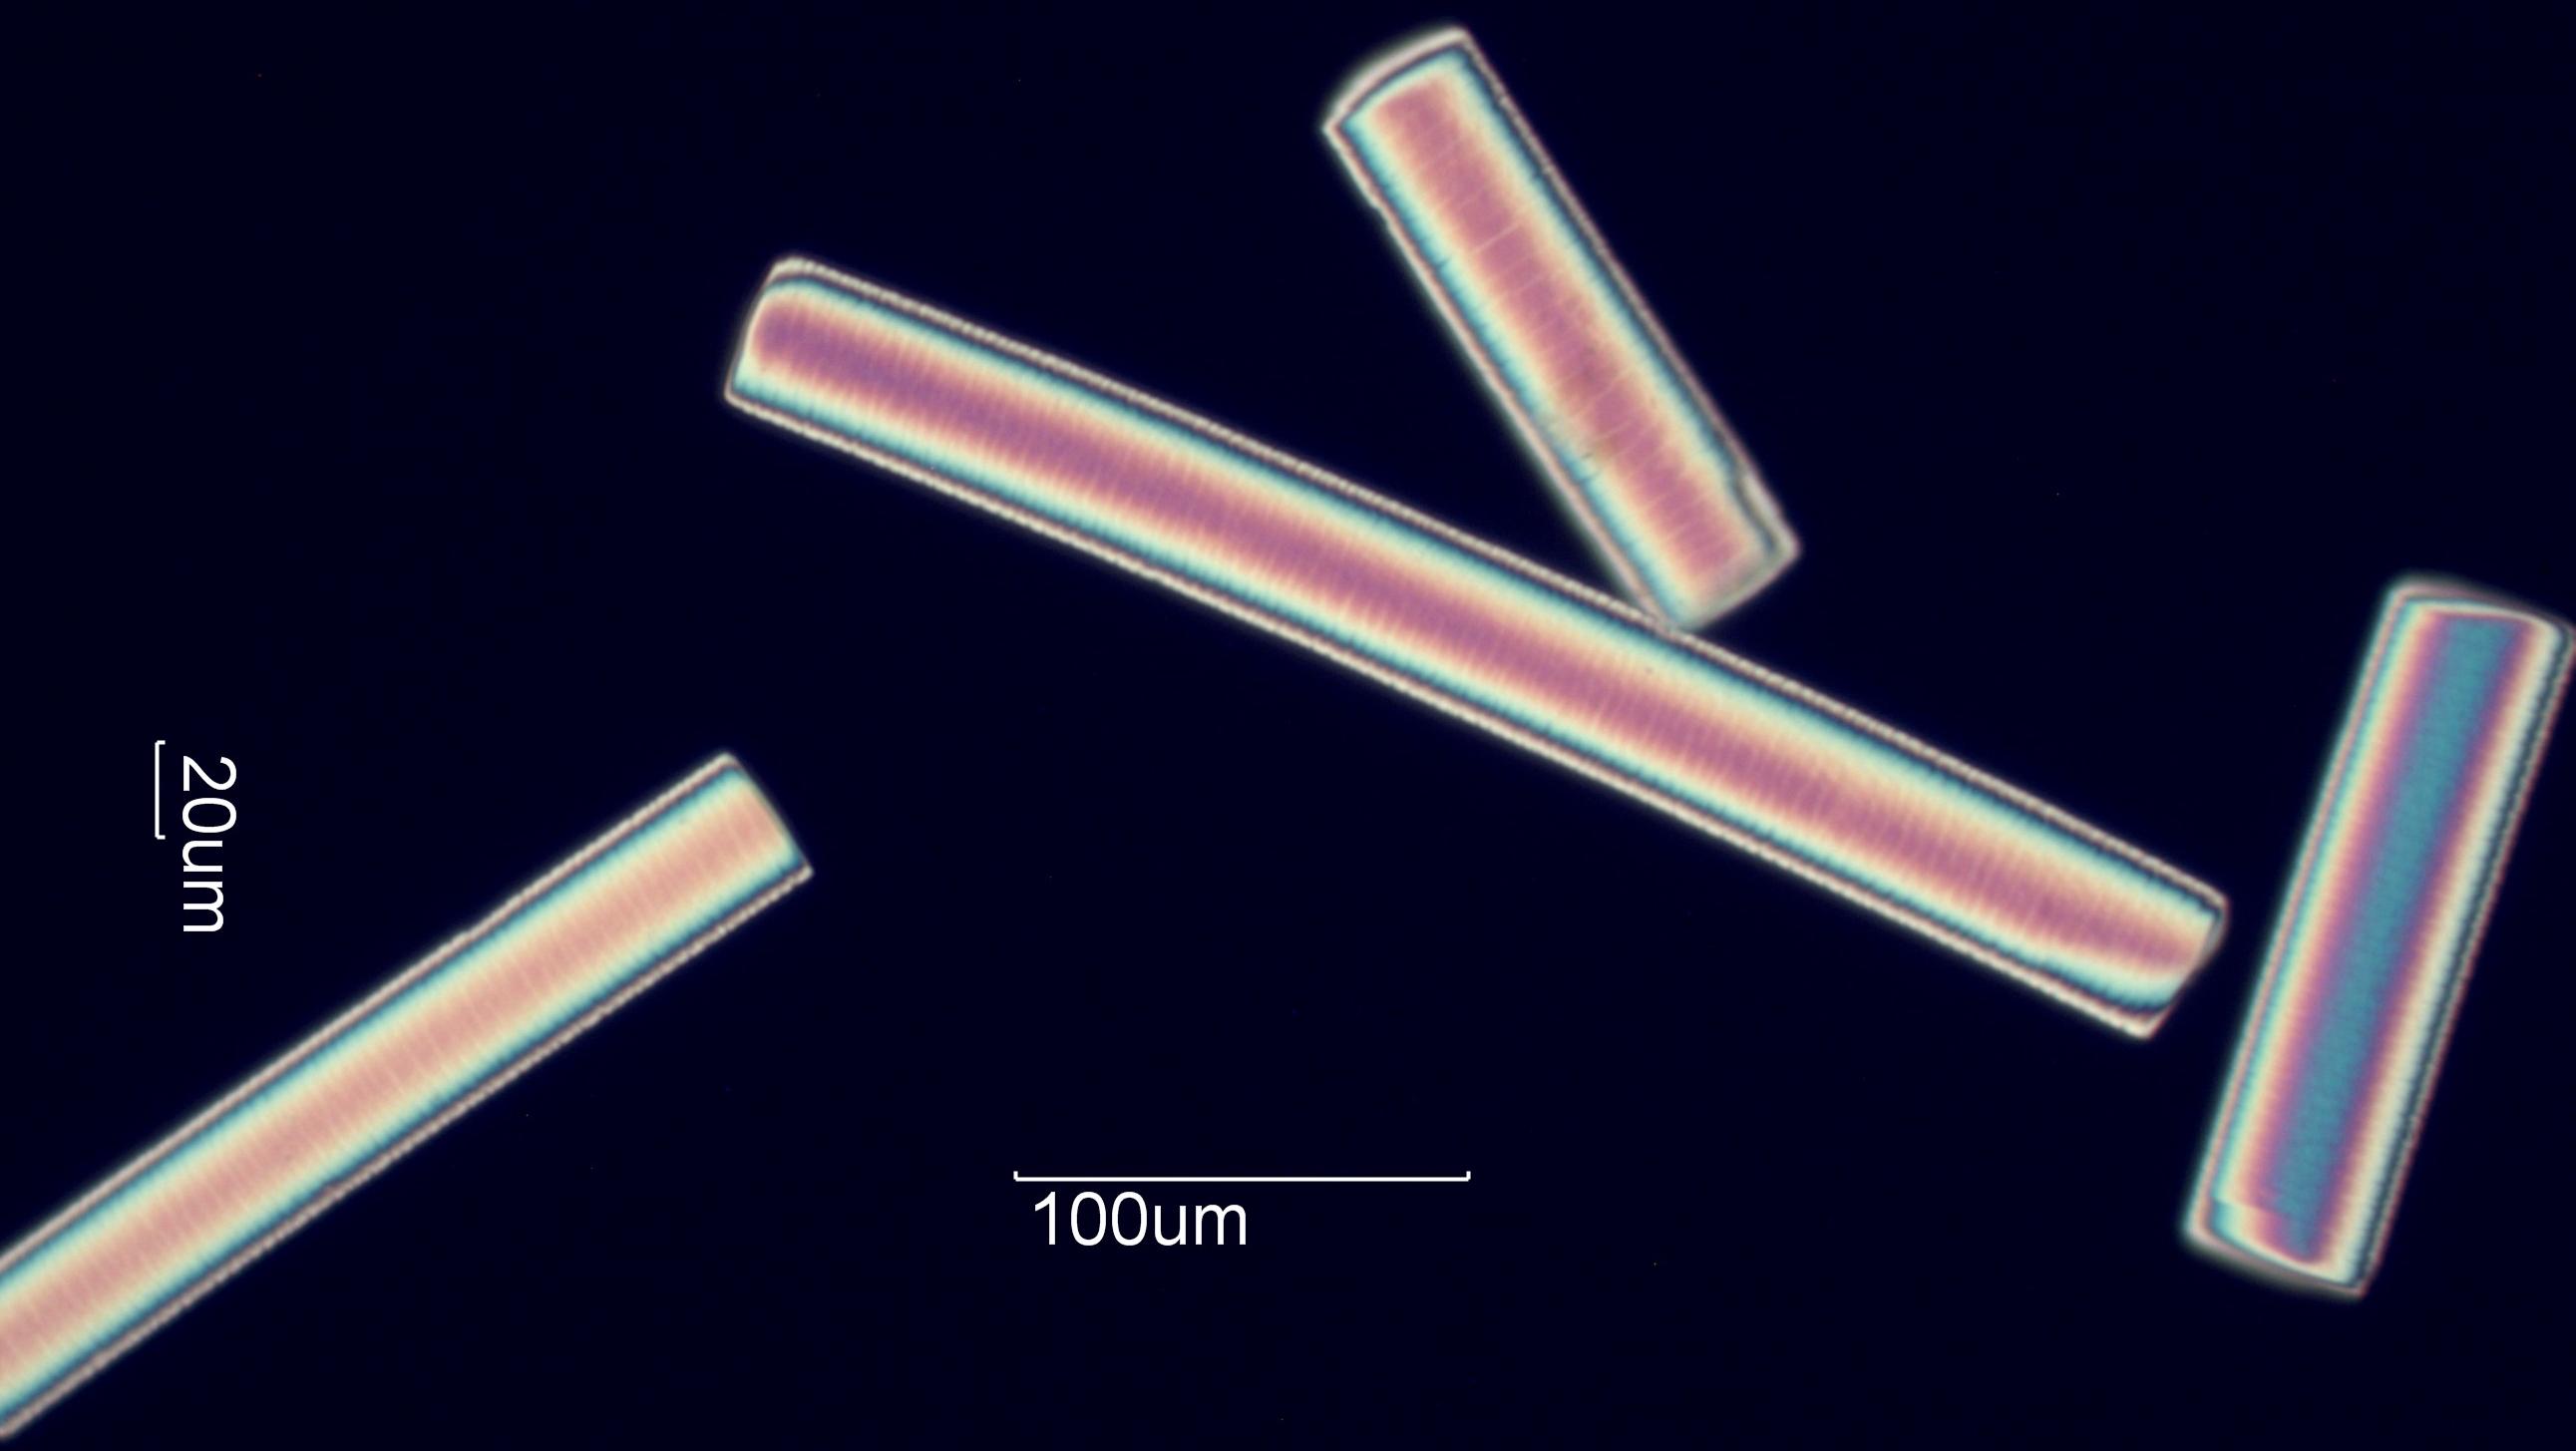 Nylon fibers under a microscope.